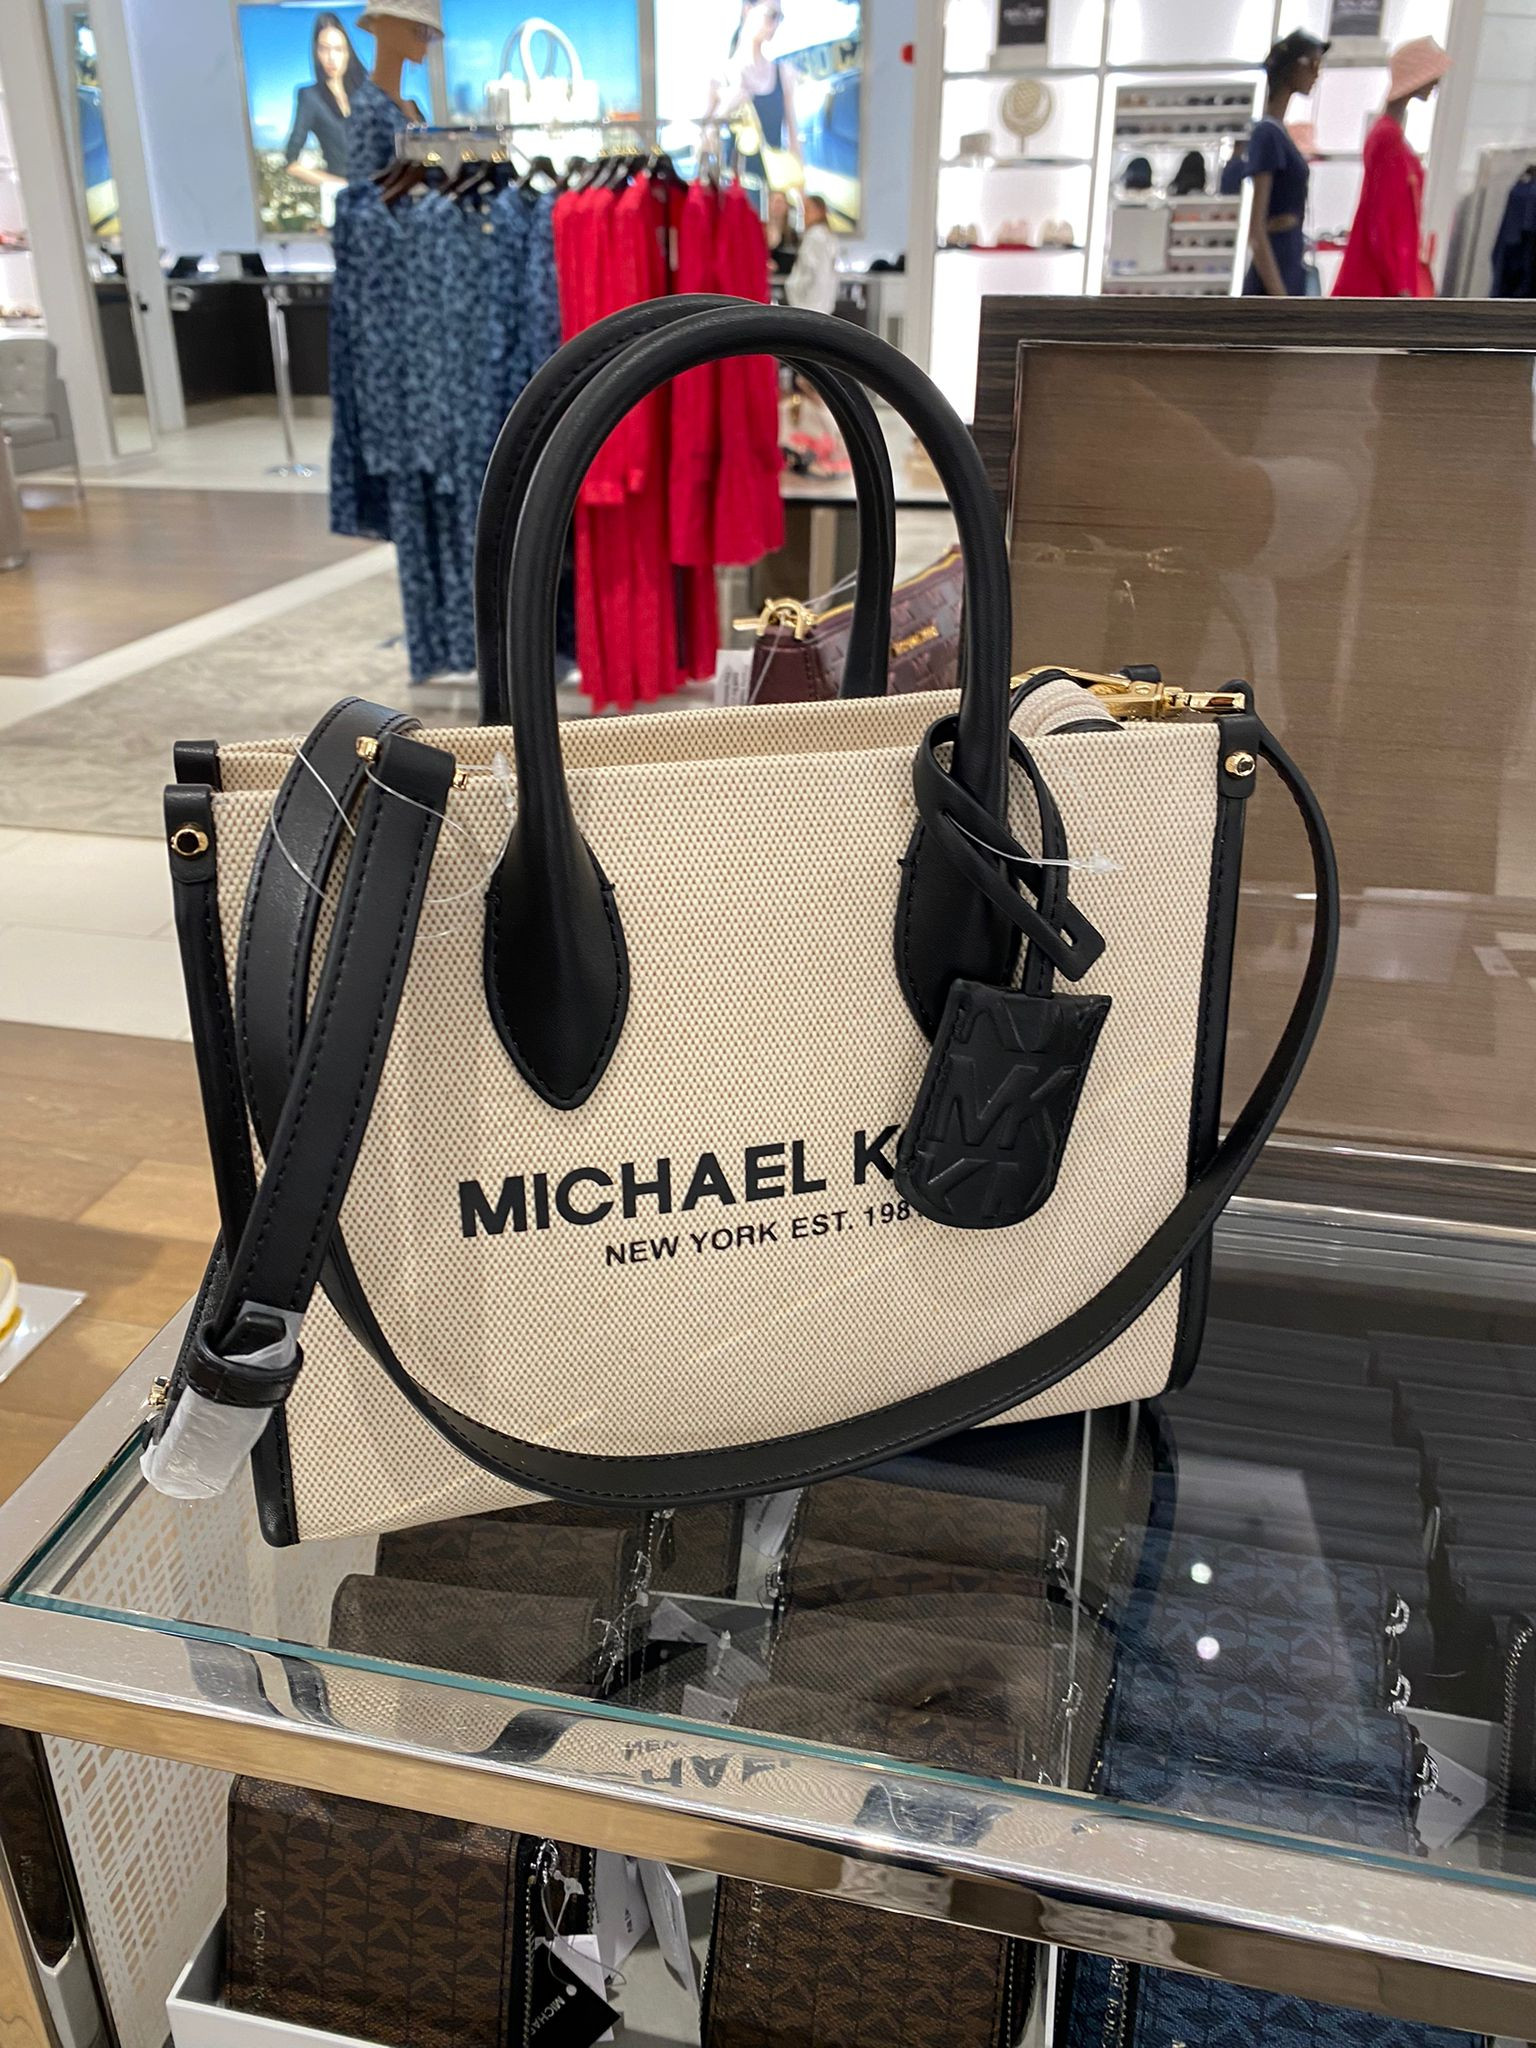 MICHAEL KORS Outlet New MIRELLA Bags! See Carmen, Serena